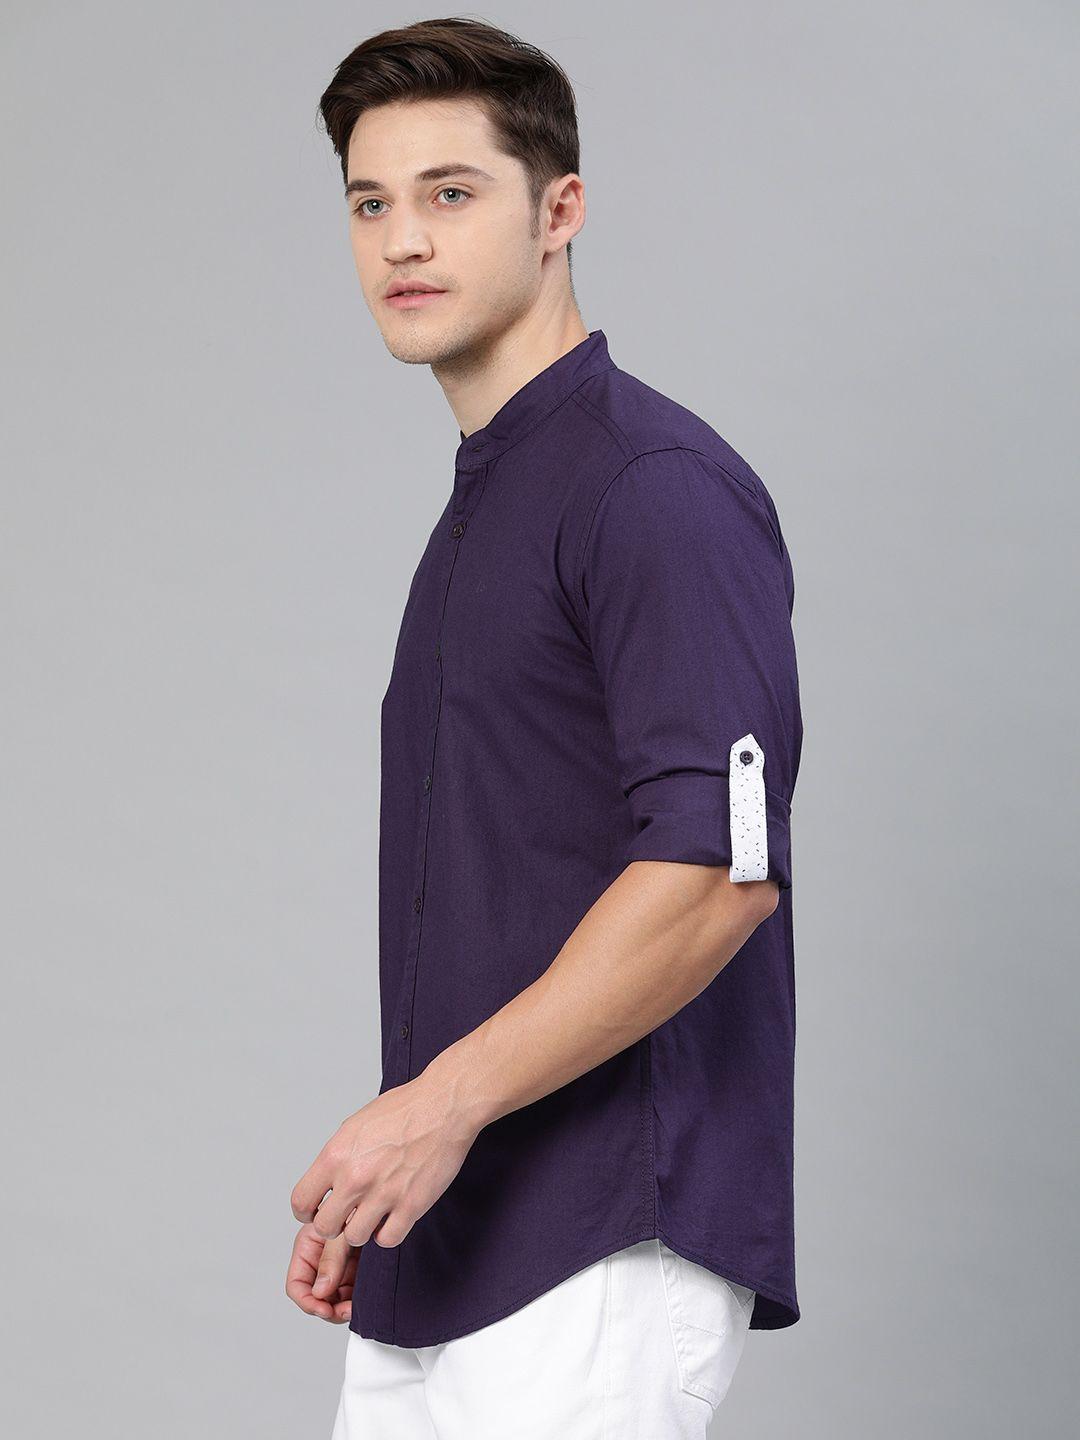 ivoc-men-purple-slim-fit-solid-casual-shirt